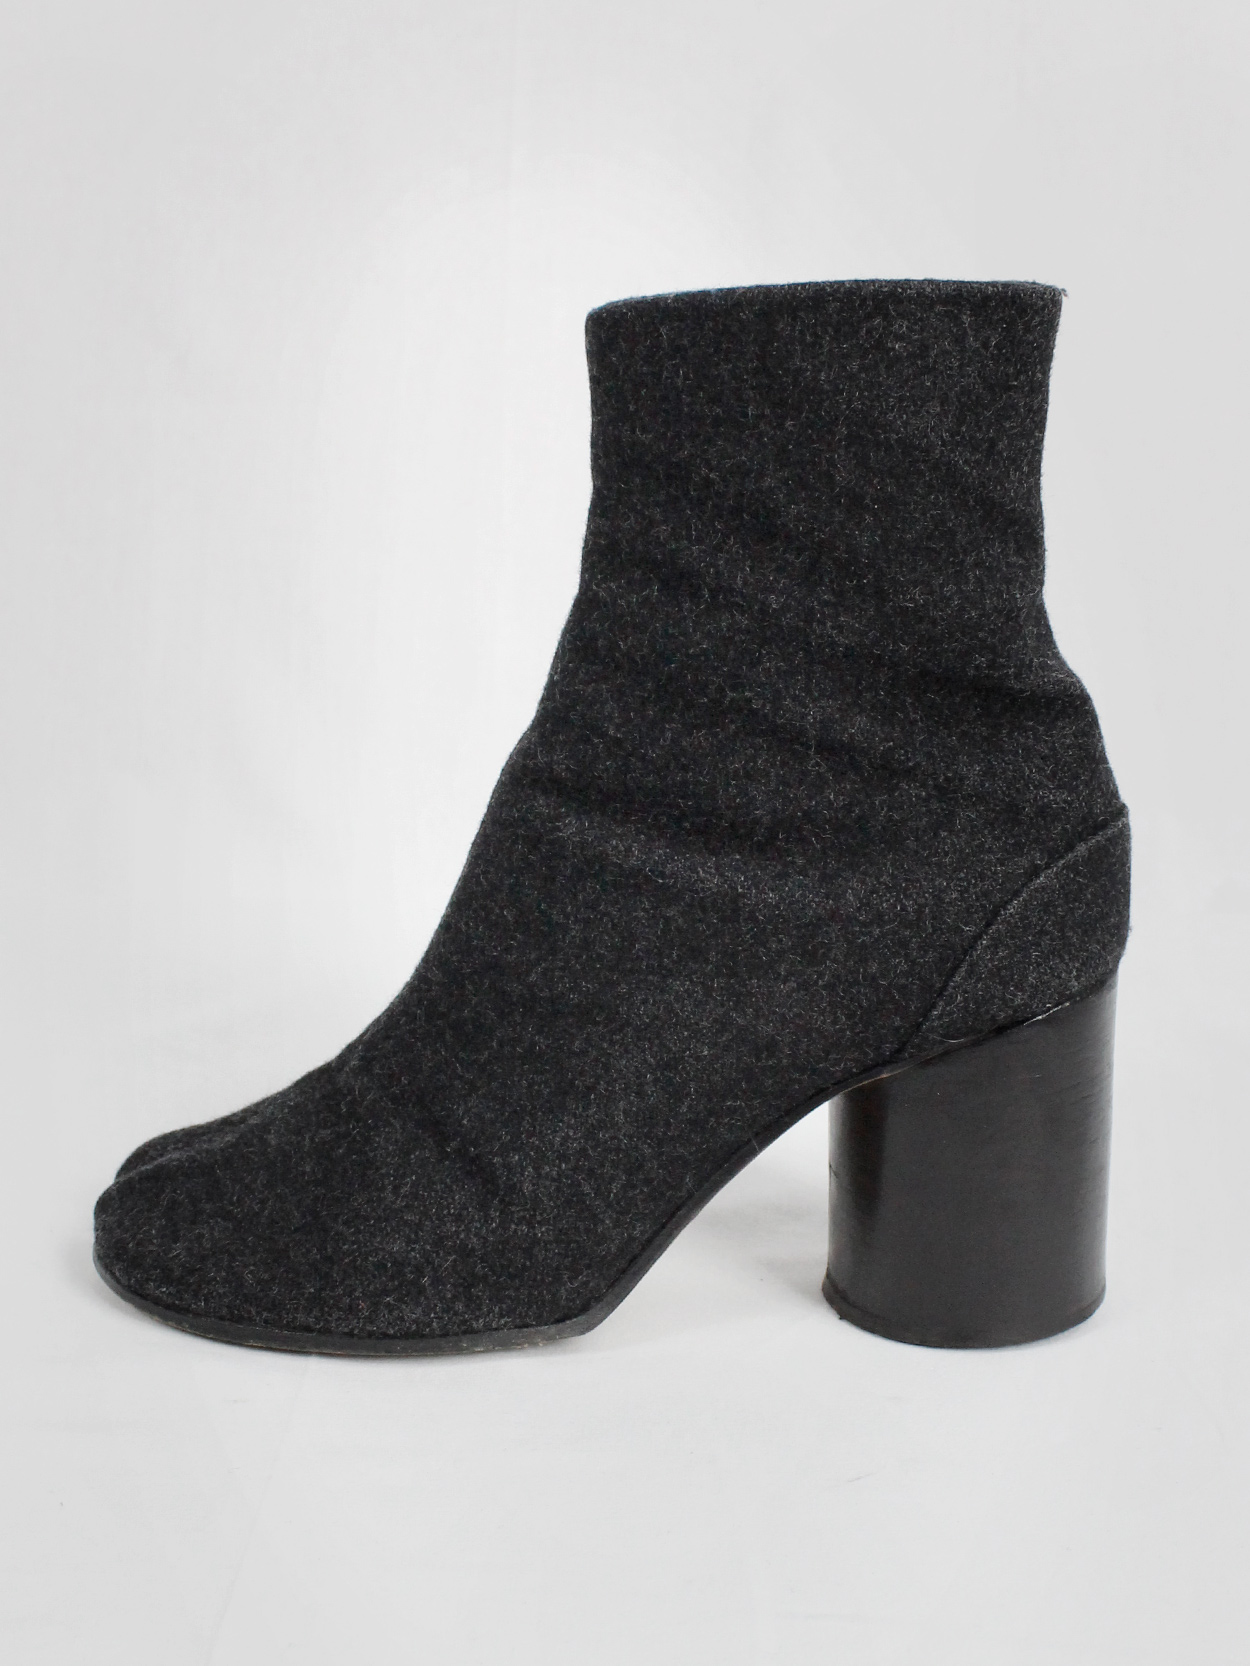 Maison Martin Margiela dark grey felt tabi boots with cylindrical 